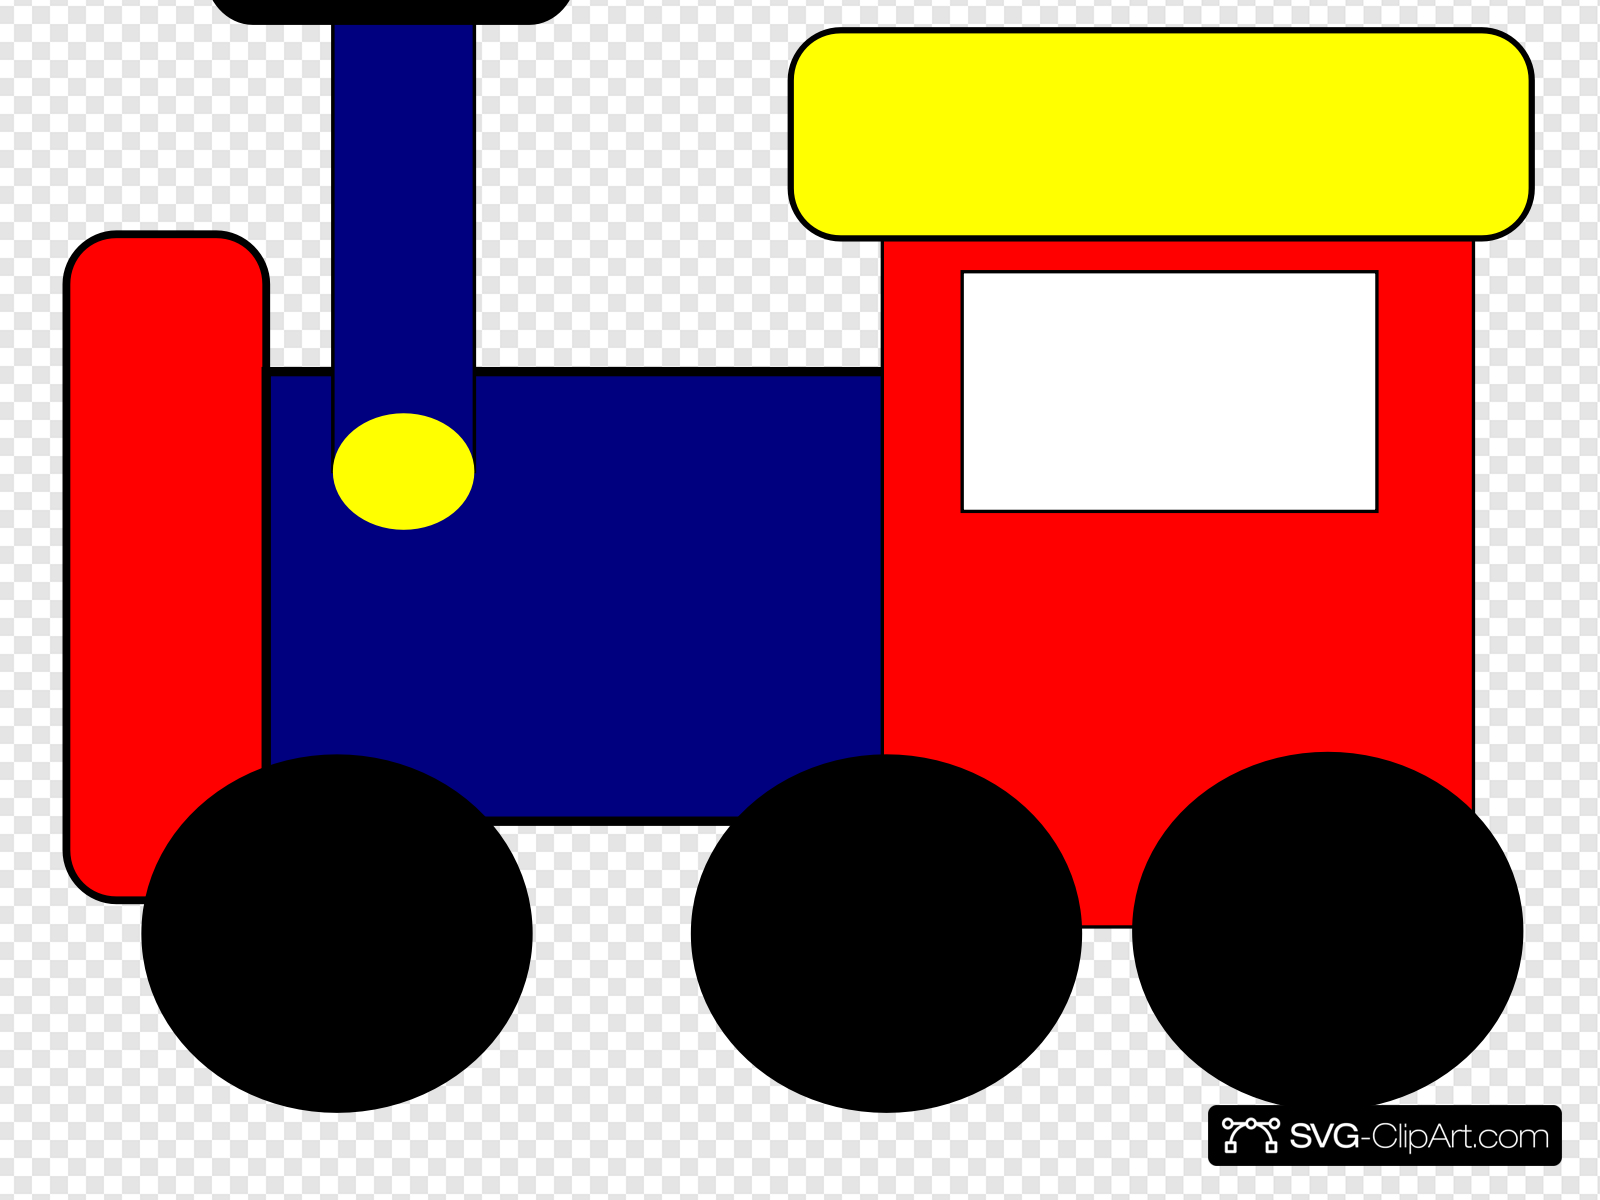 Train Engine Clip art, Icon and SVG.